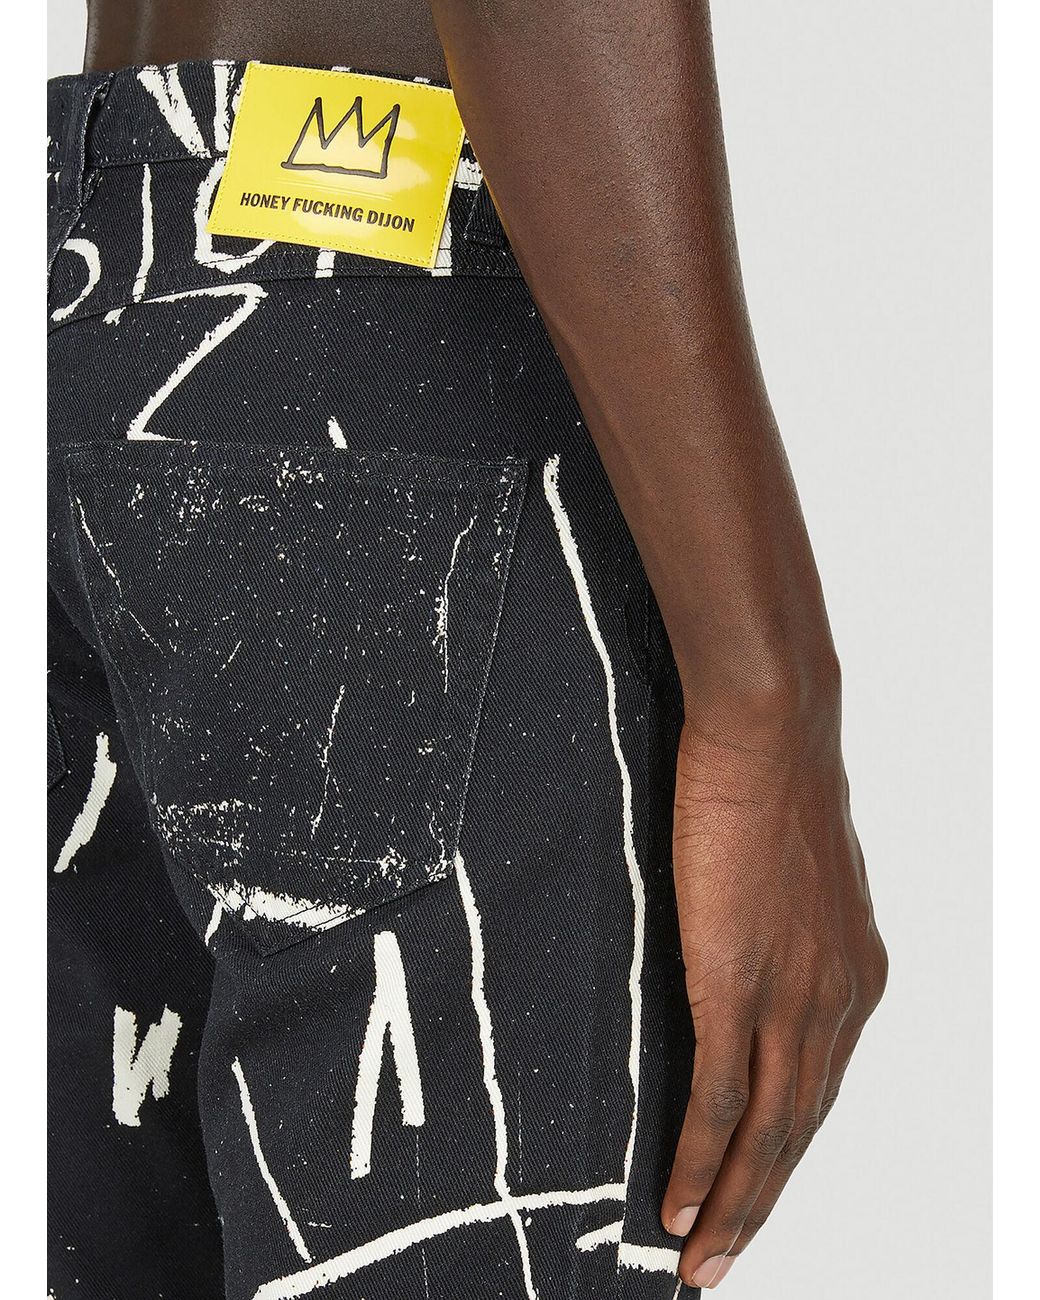 Honey Fucking Dijon Basquiat Jeans in Black | Lyst